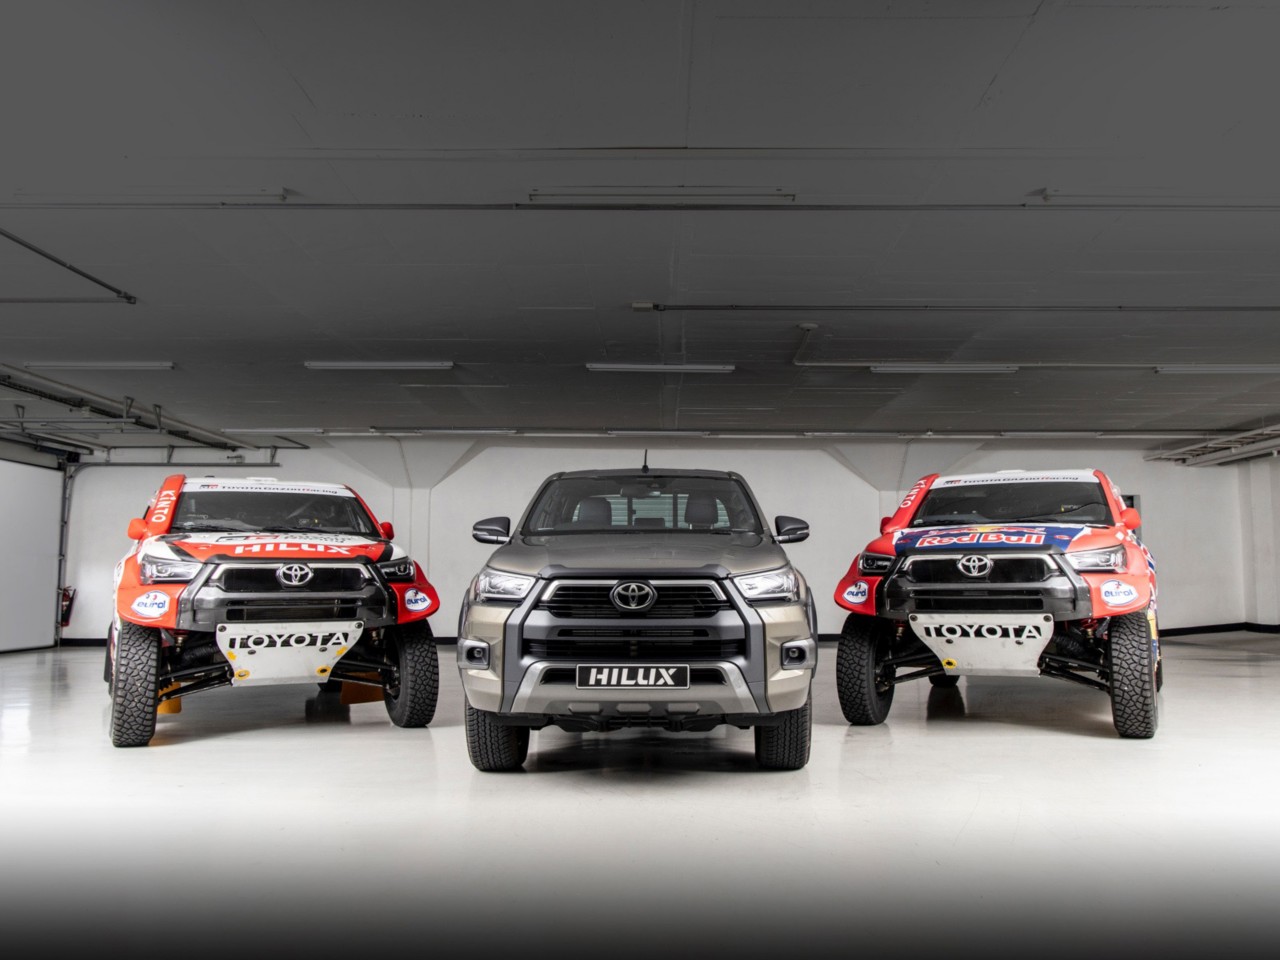 Three Toyota rally cars